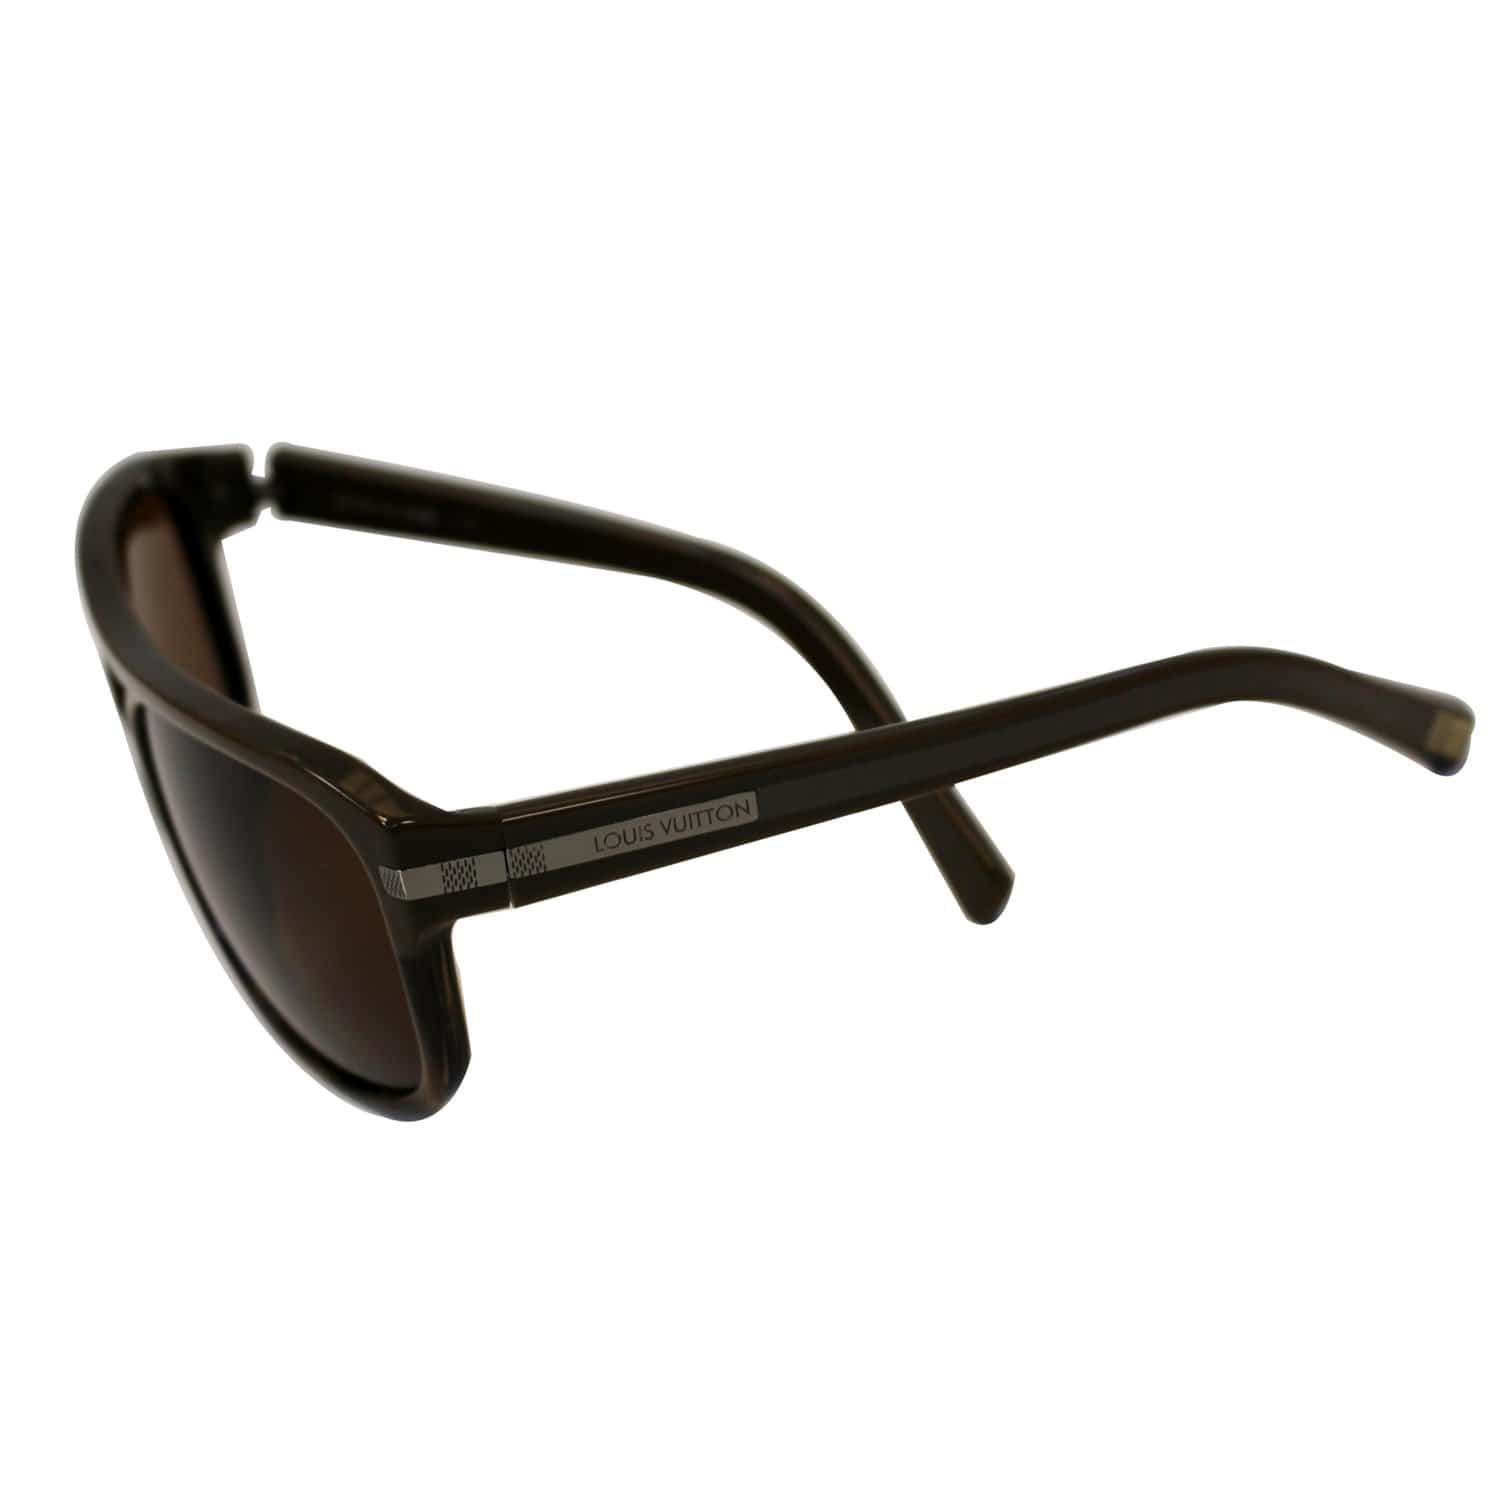 LOUIS VUITTON Possession Pilote Sunglasses Black 26976